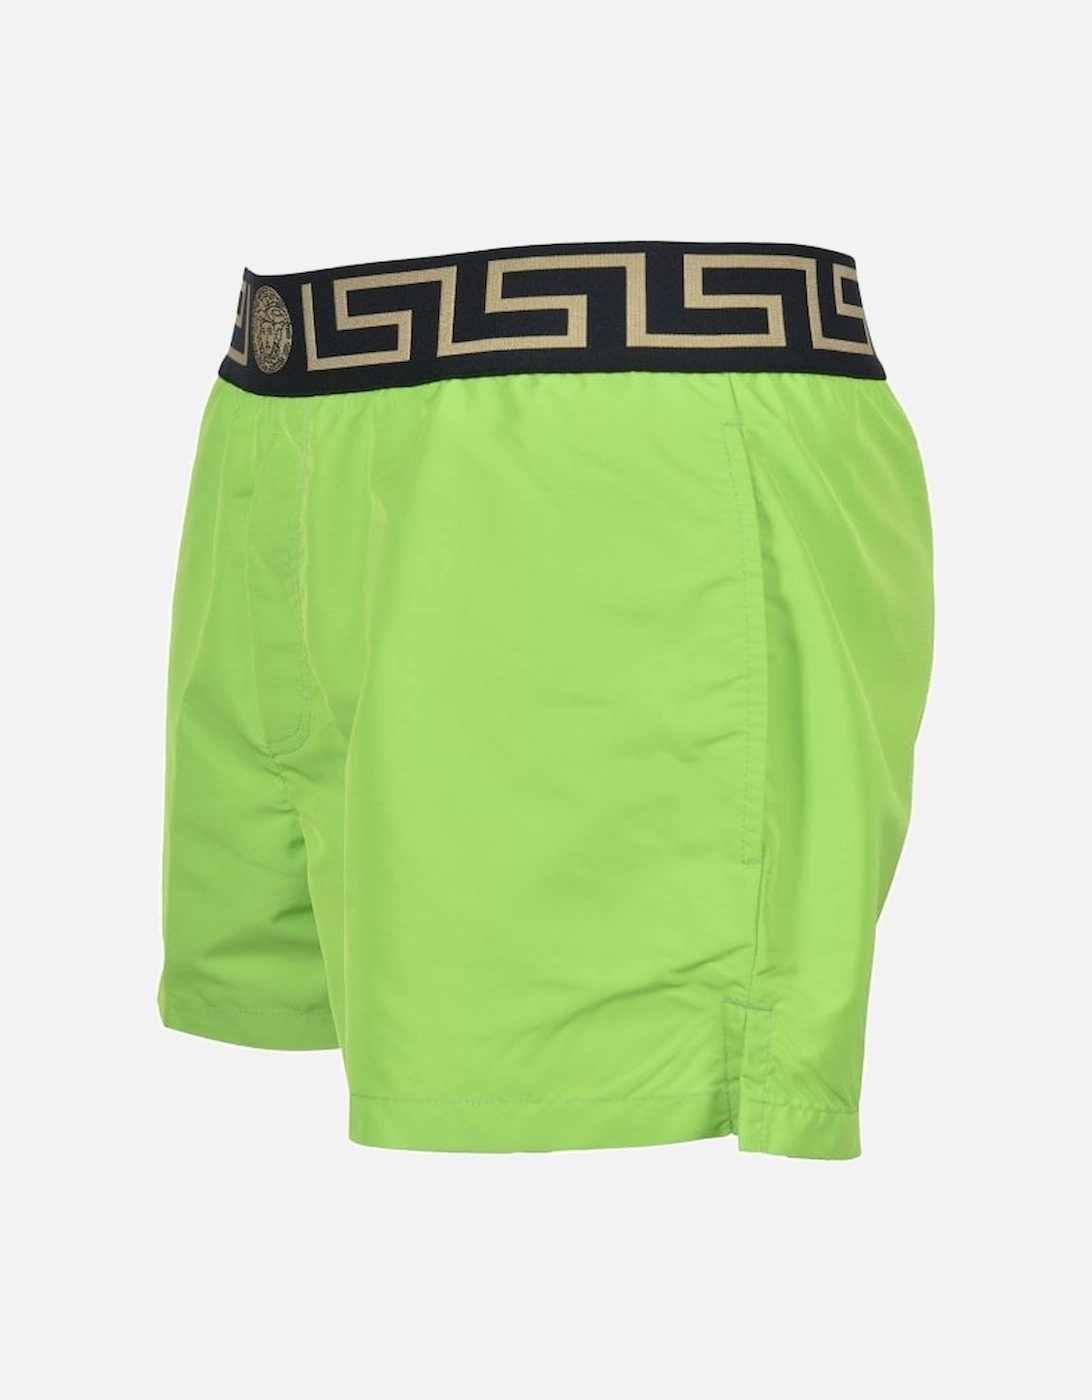 Iconic Greca Luxe Swim Shorts, Lime/black/gold